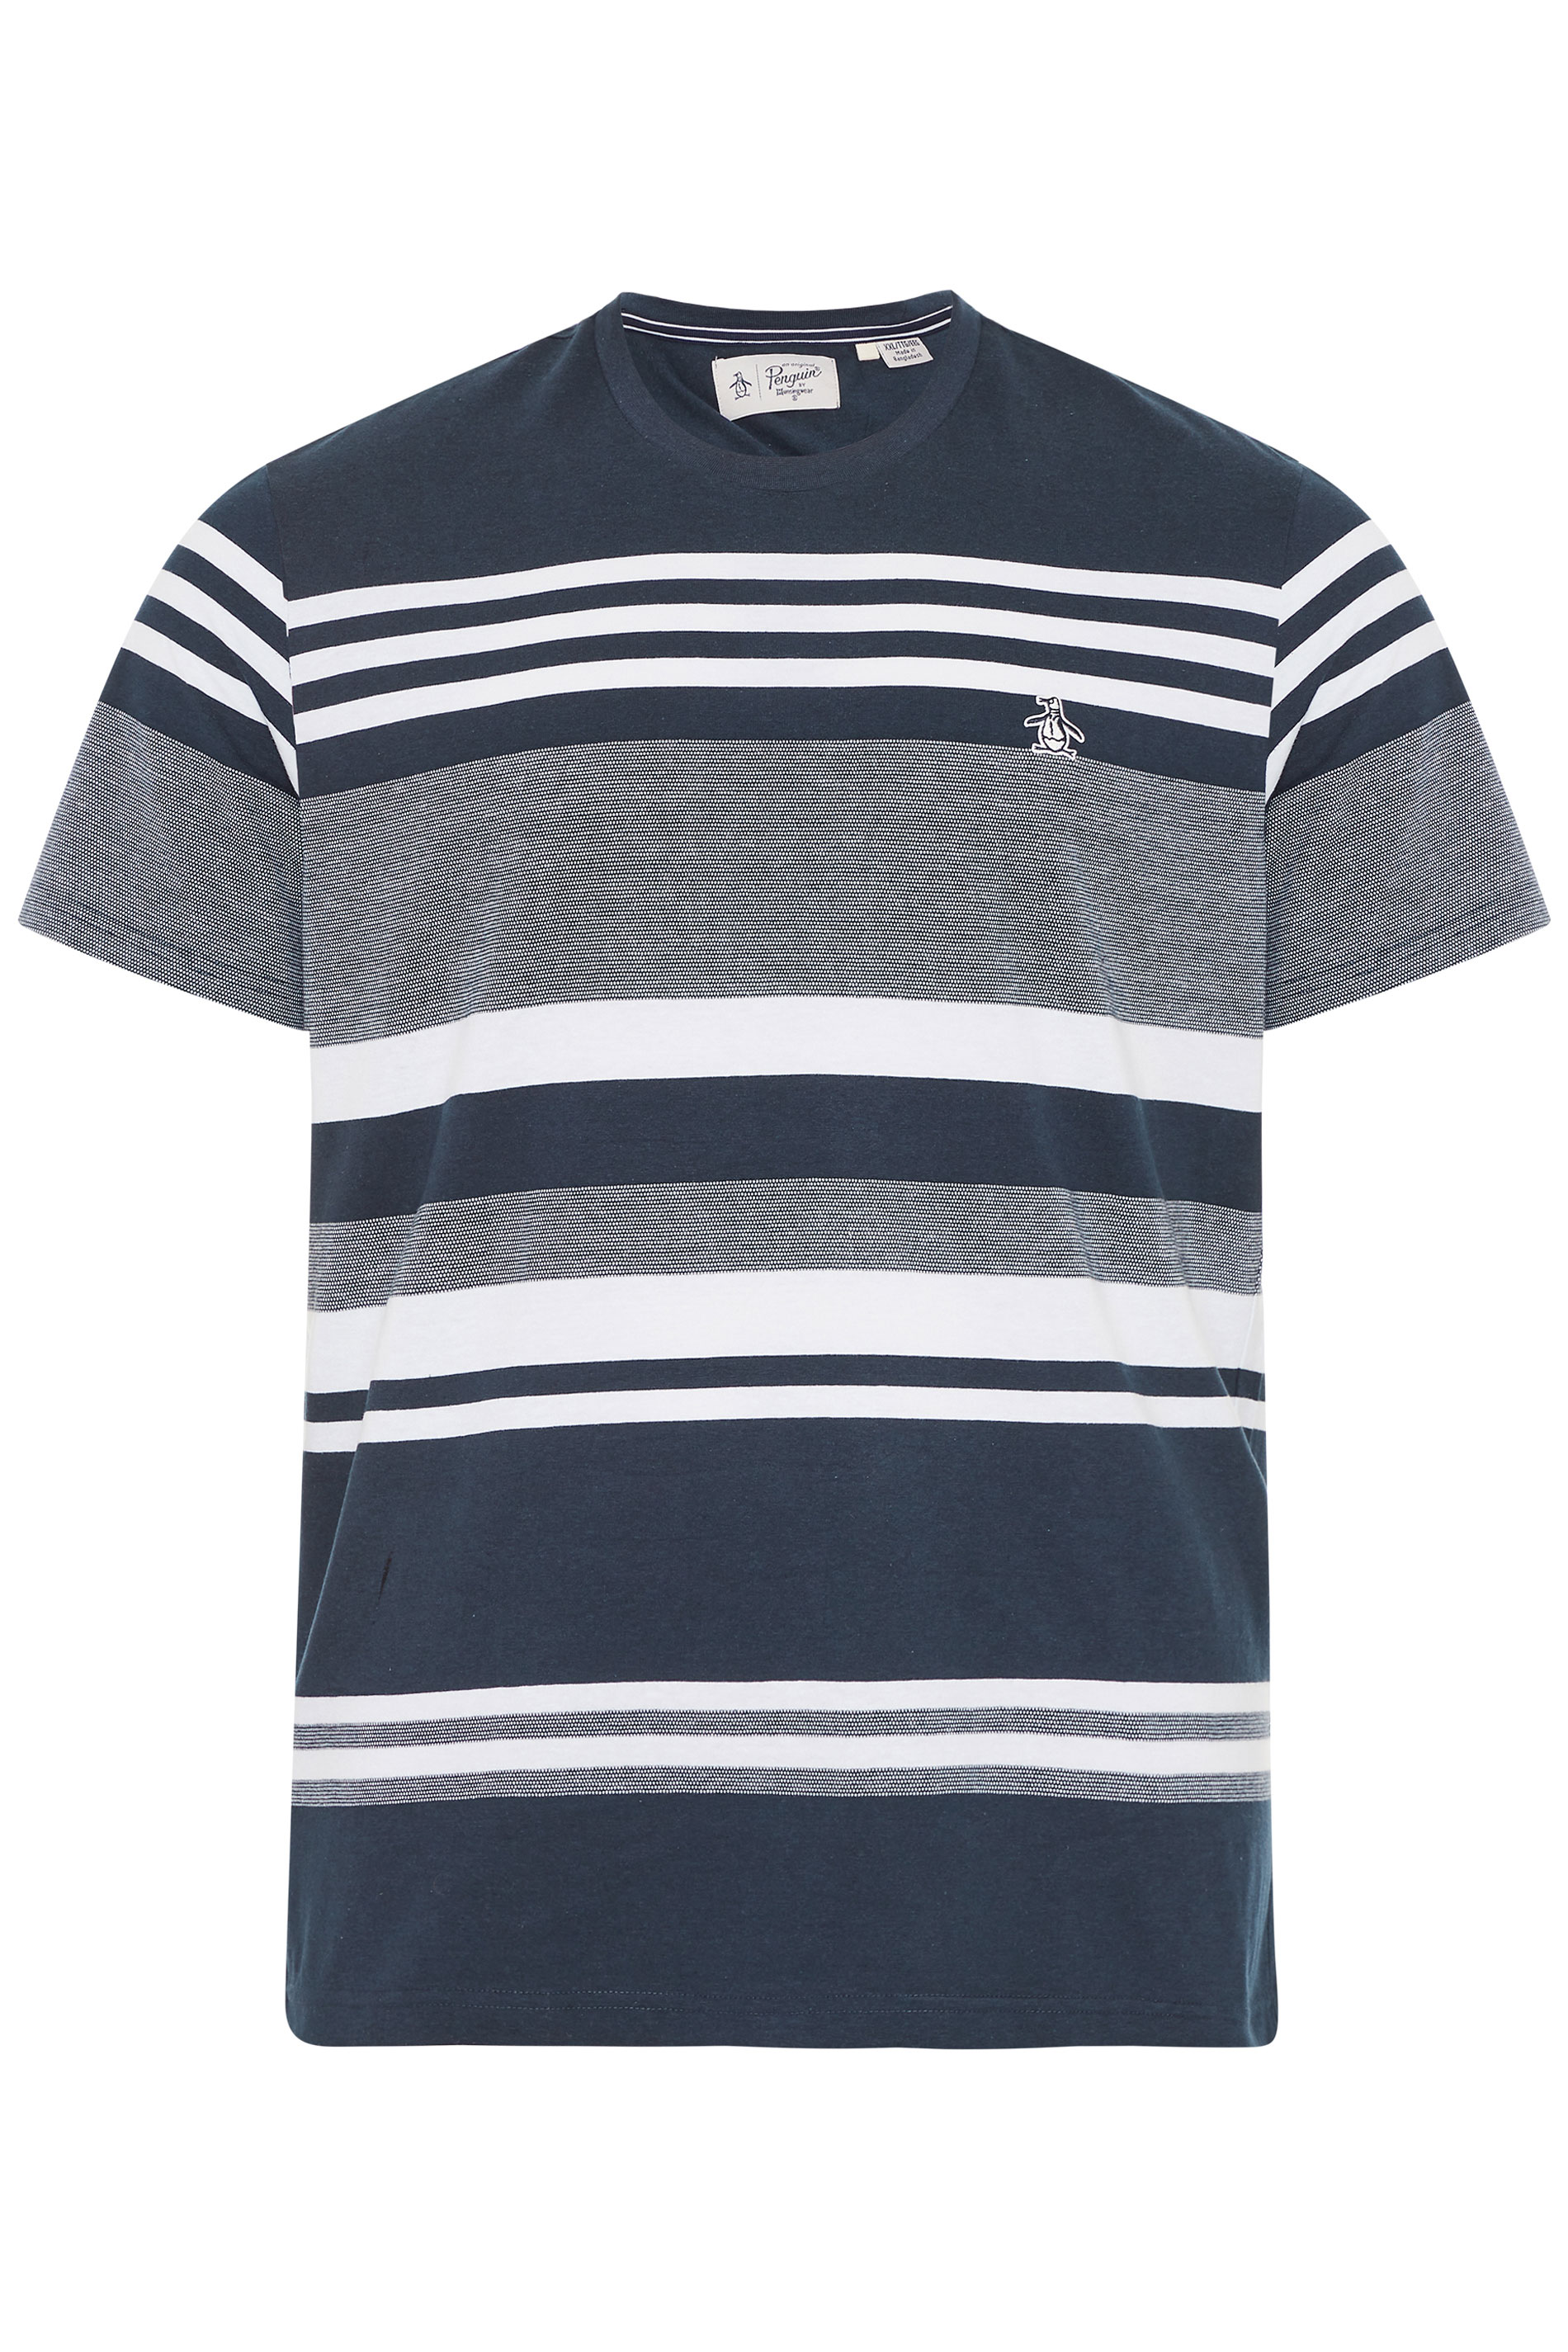 PENGUIN MUNSINGWEAR Navy Stripe T-Shirt | BadRhino